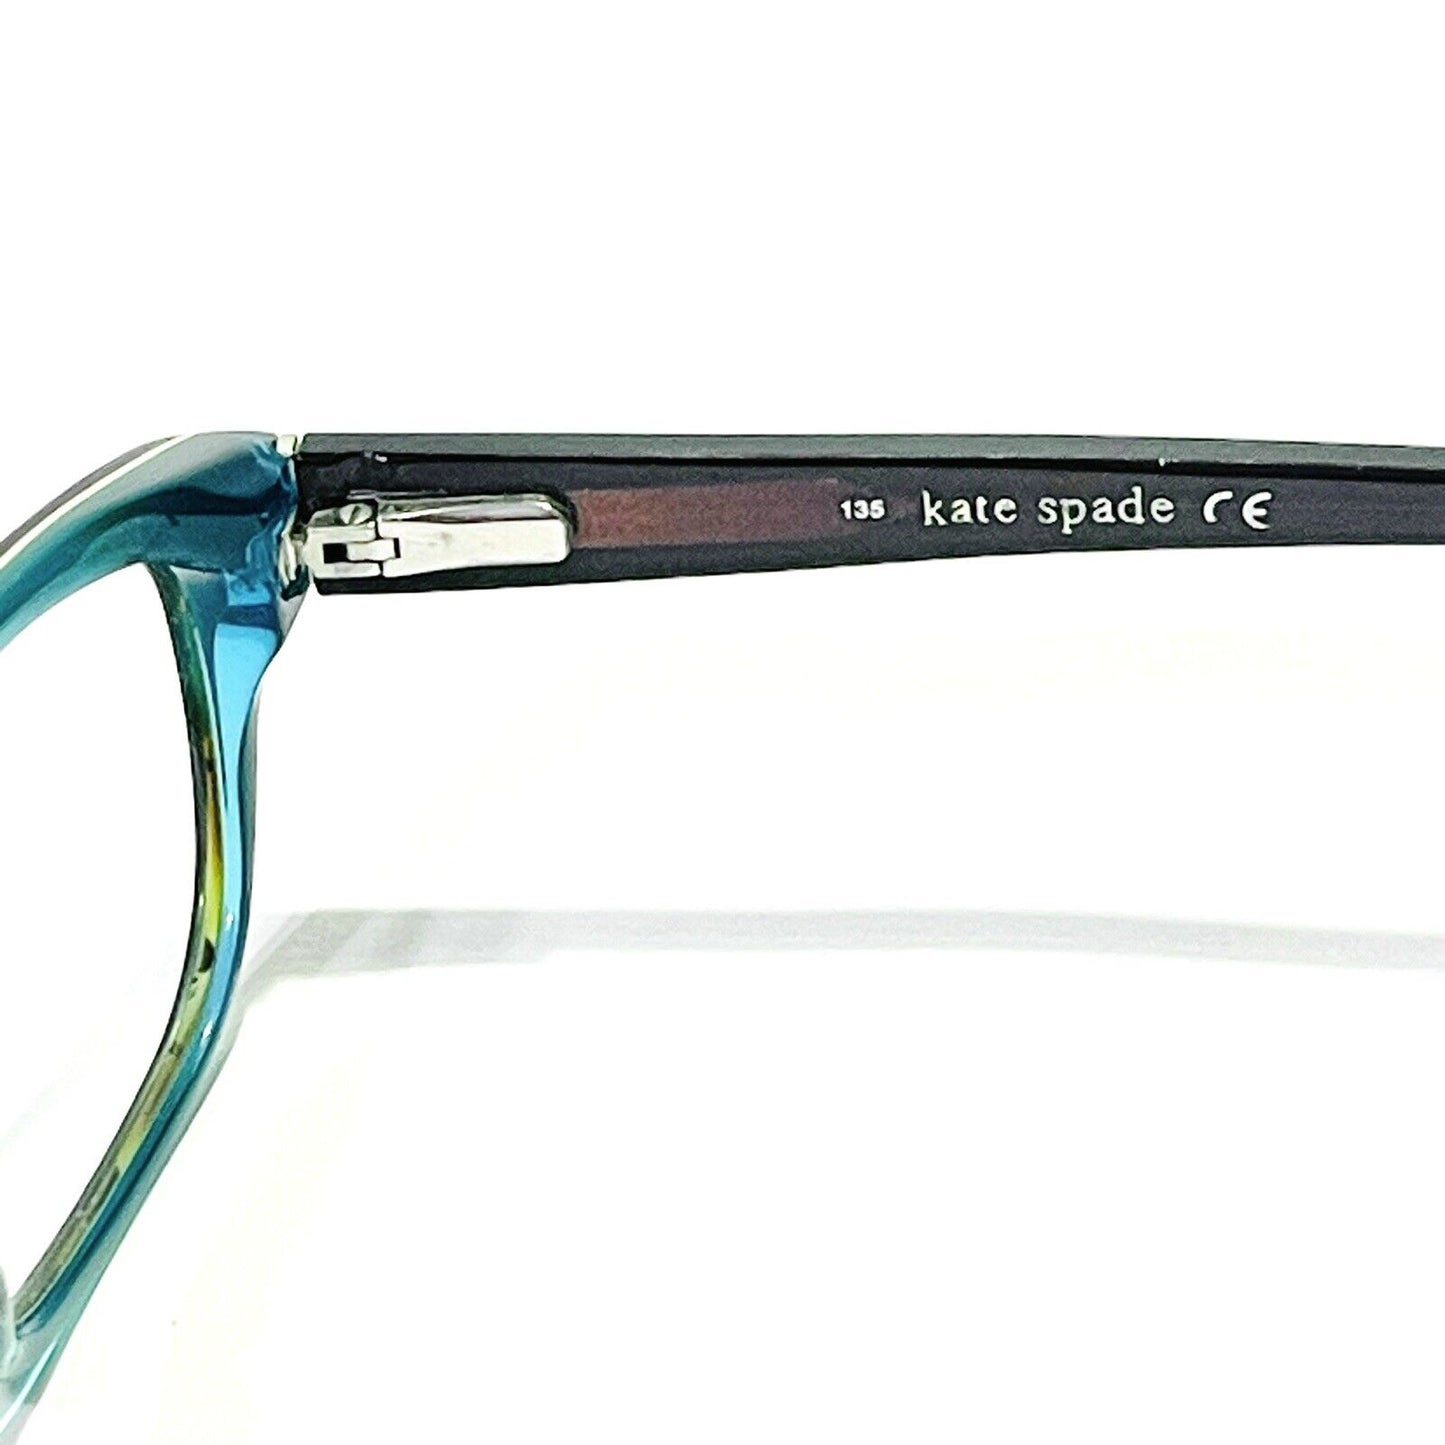 Kate Spade Eyeglasses Blakely 0JLM Frames Brown Tortoise Blue Womens Glasses